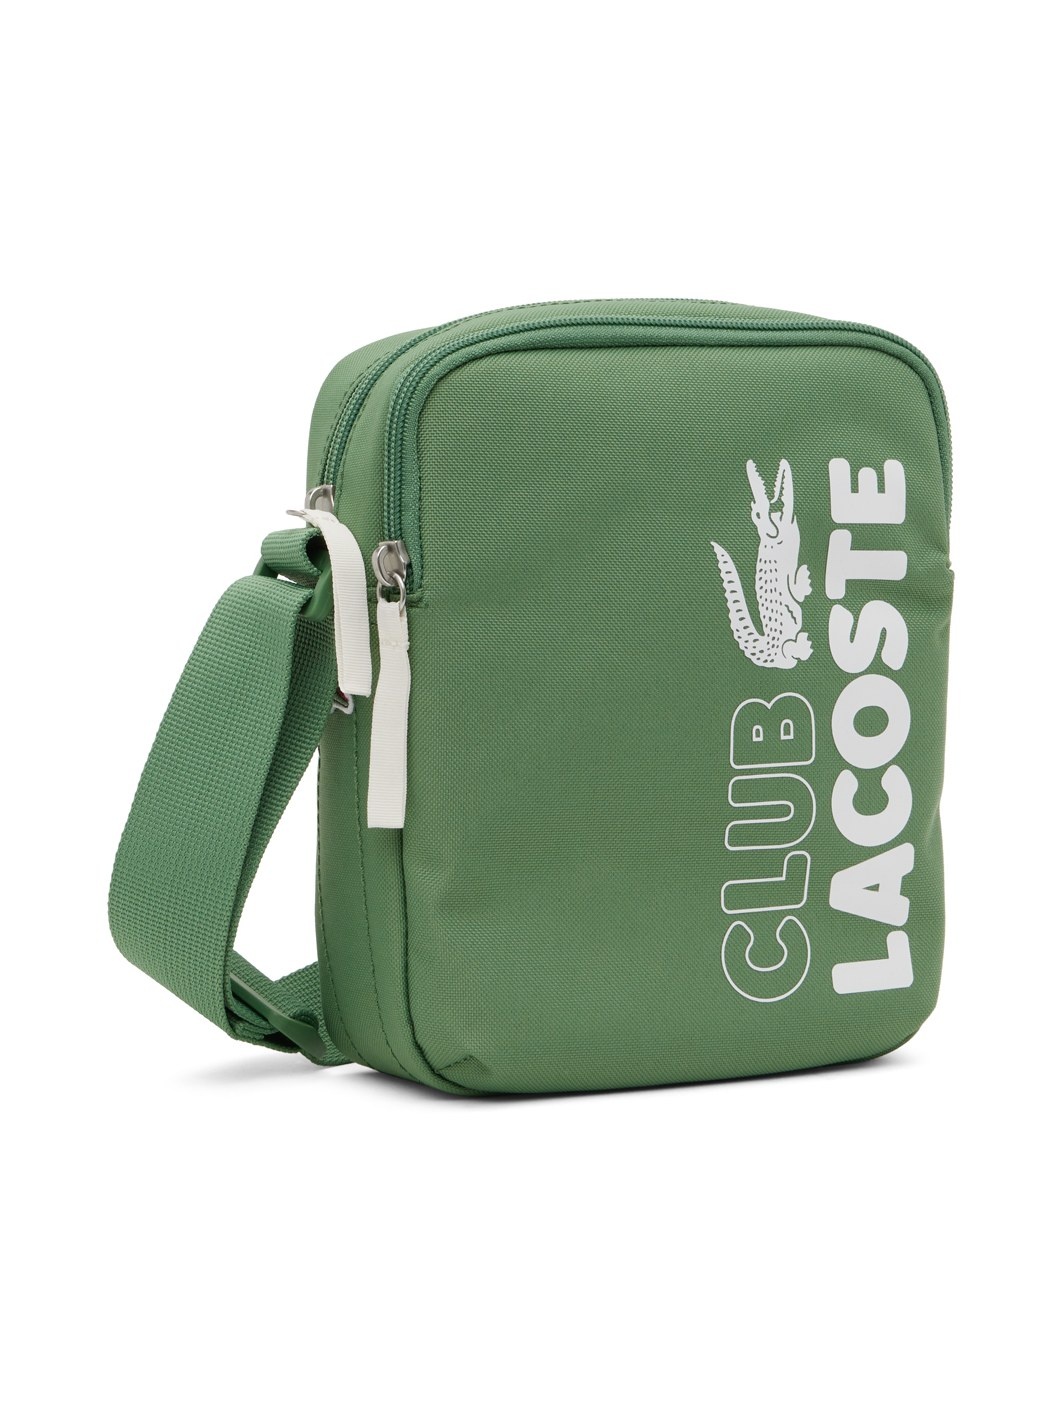 Green Neocroc Bag - 2